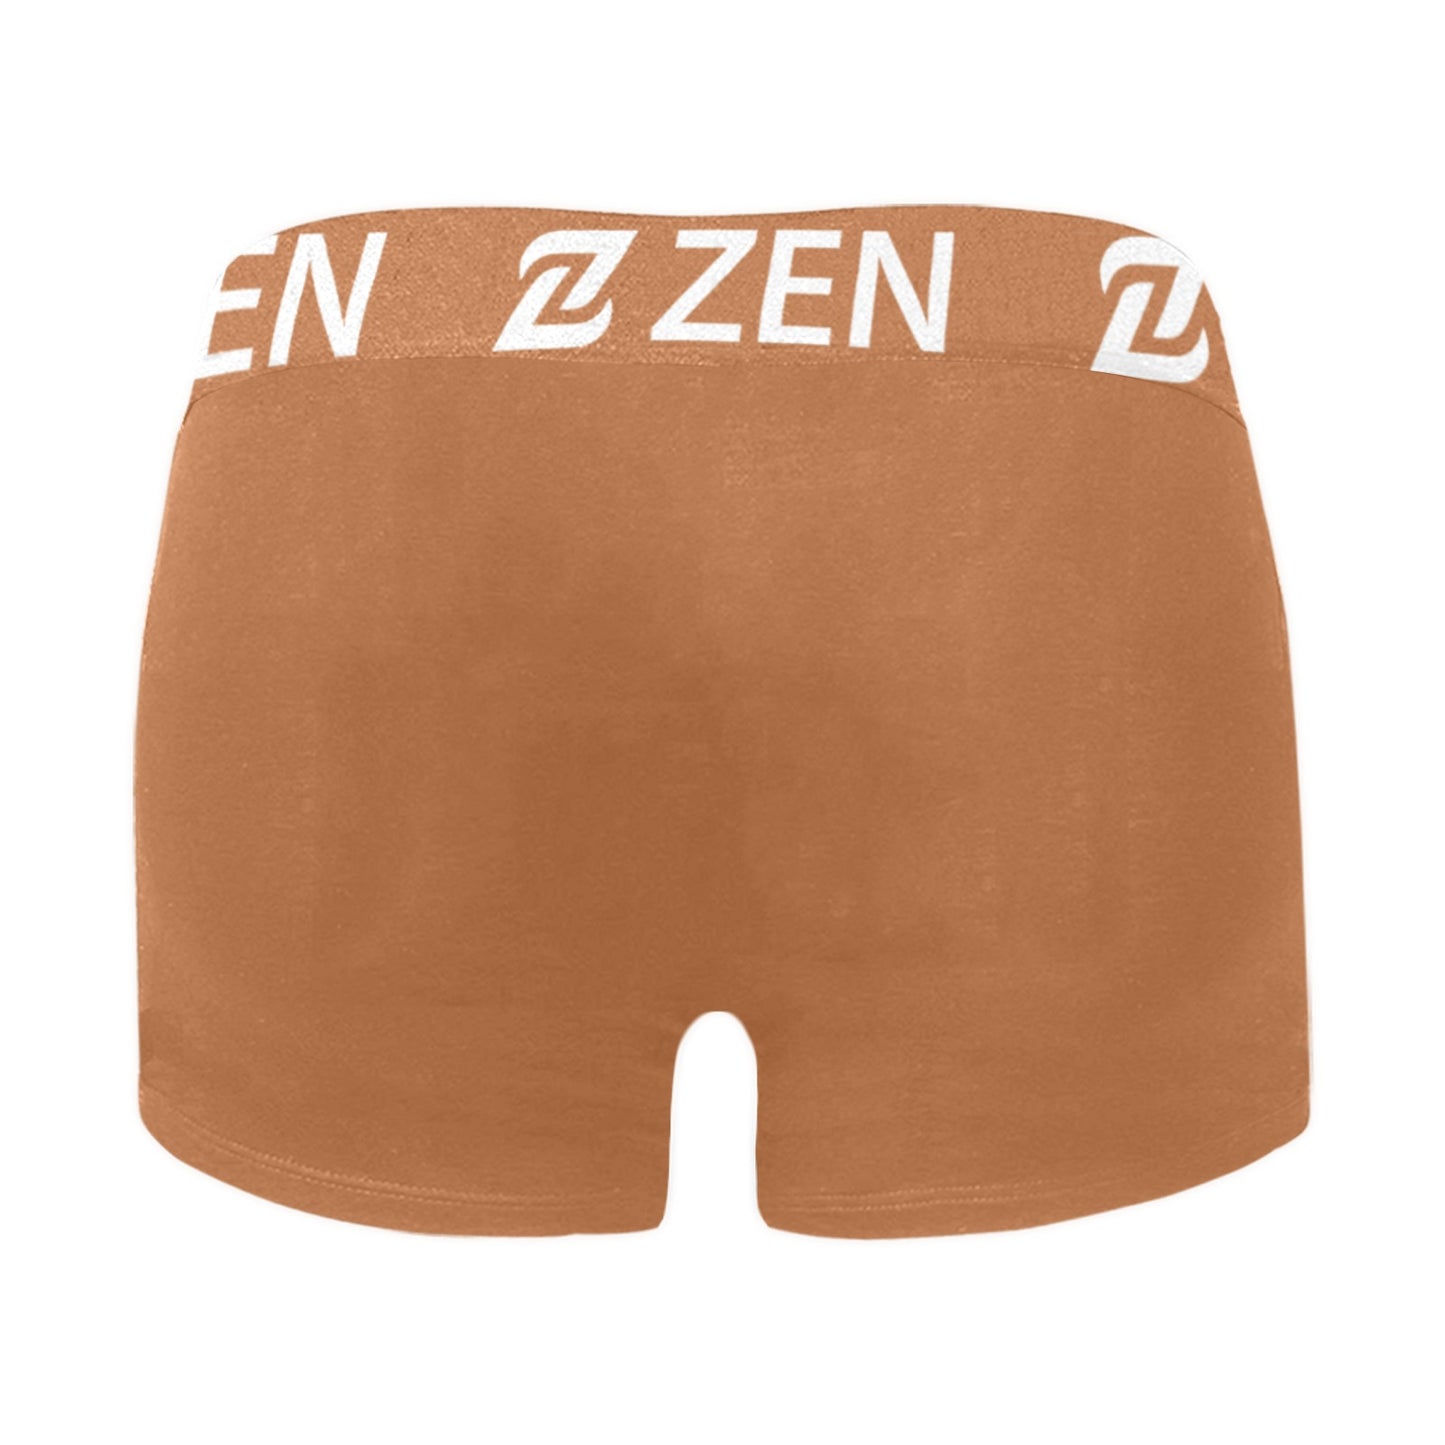 Zen Waistband - Nude Brown Tan